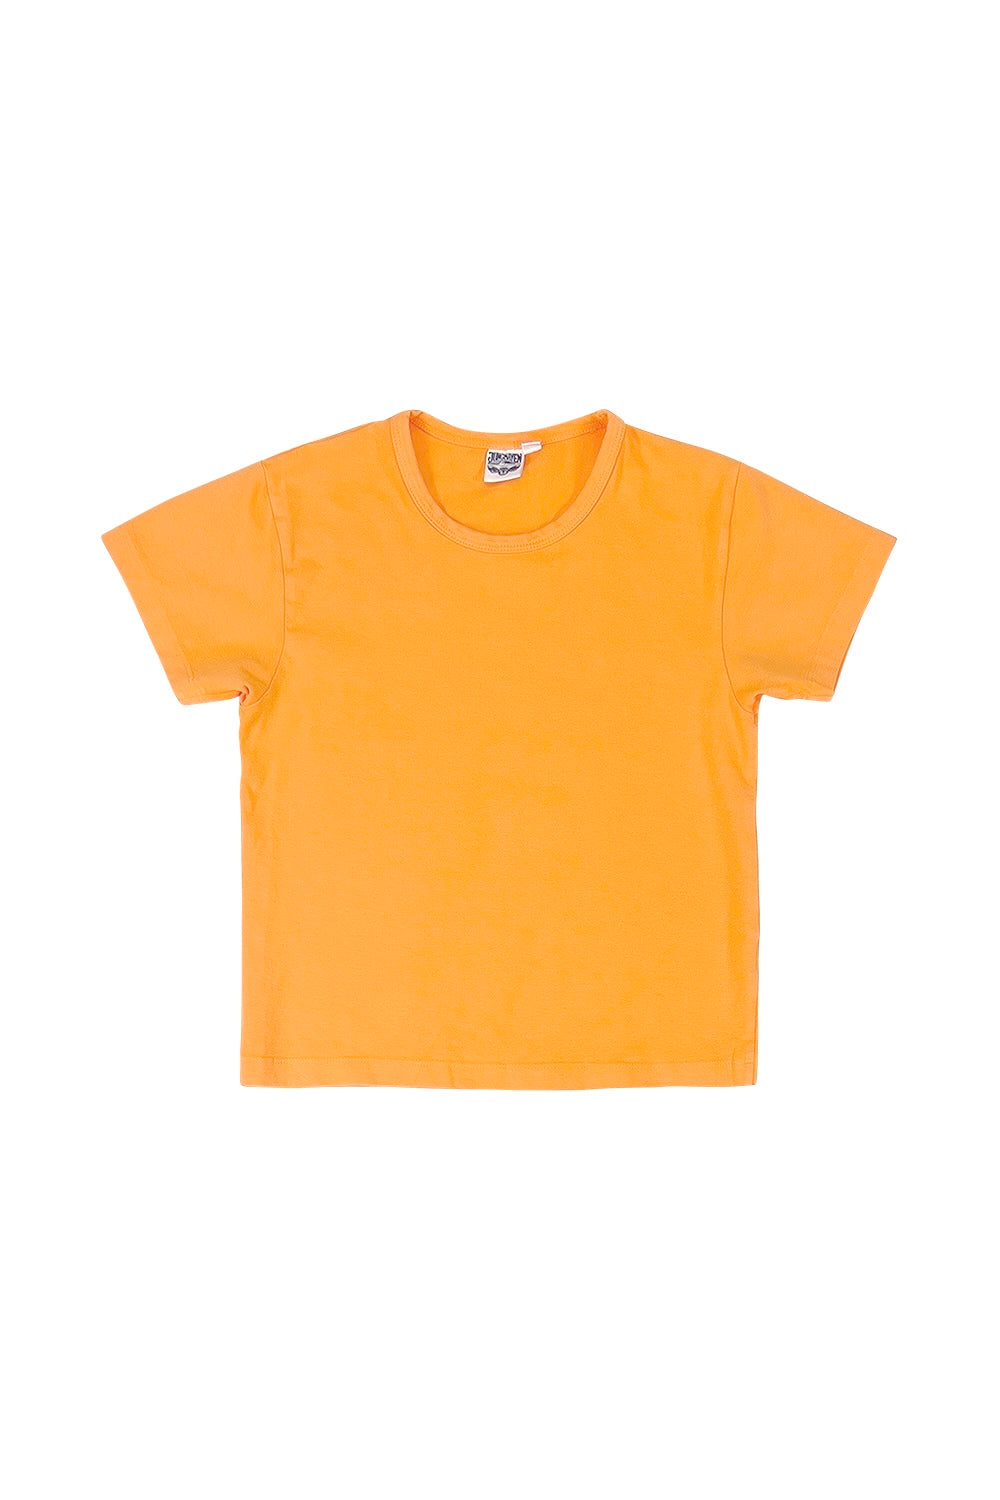 Tiny Tee | Jungmaven Hemp Clothing & Accessories / Color: Apricot Crush